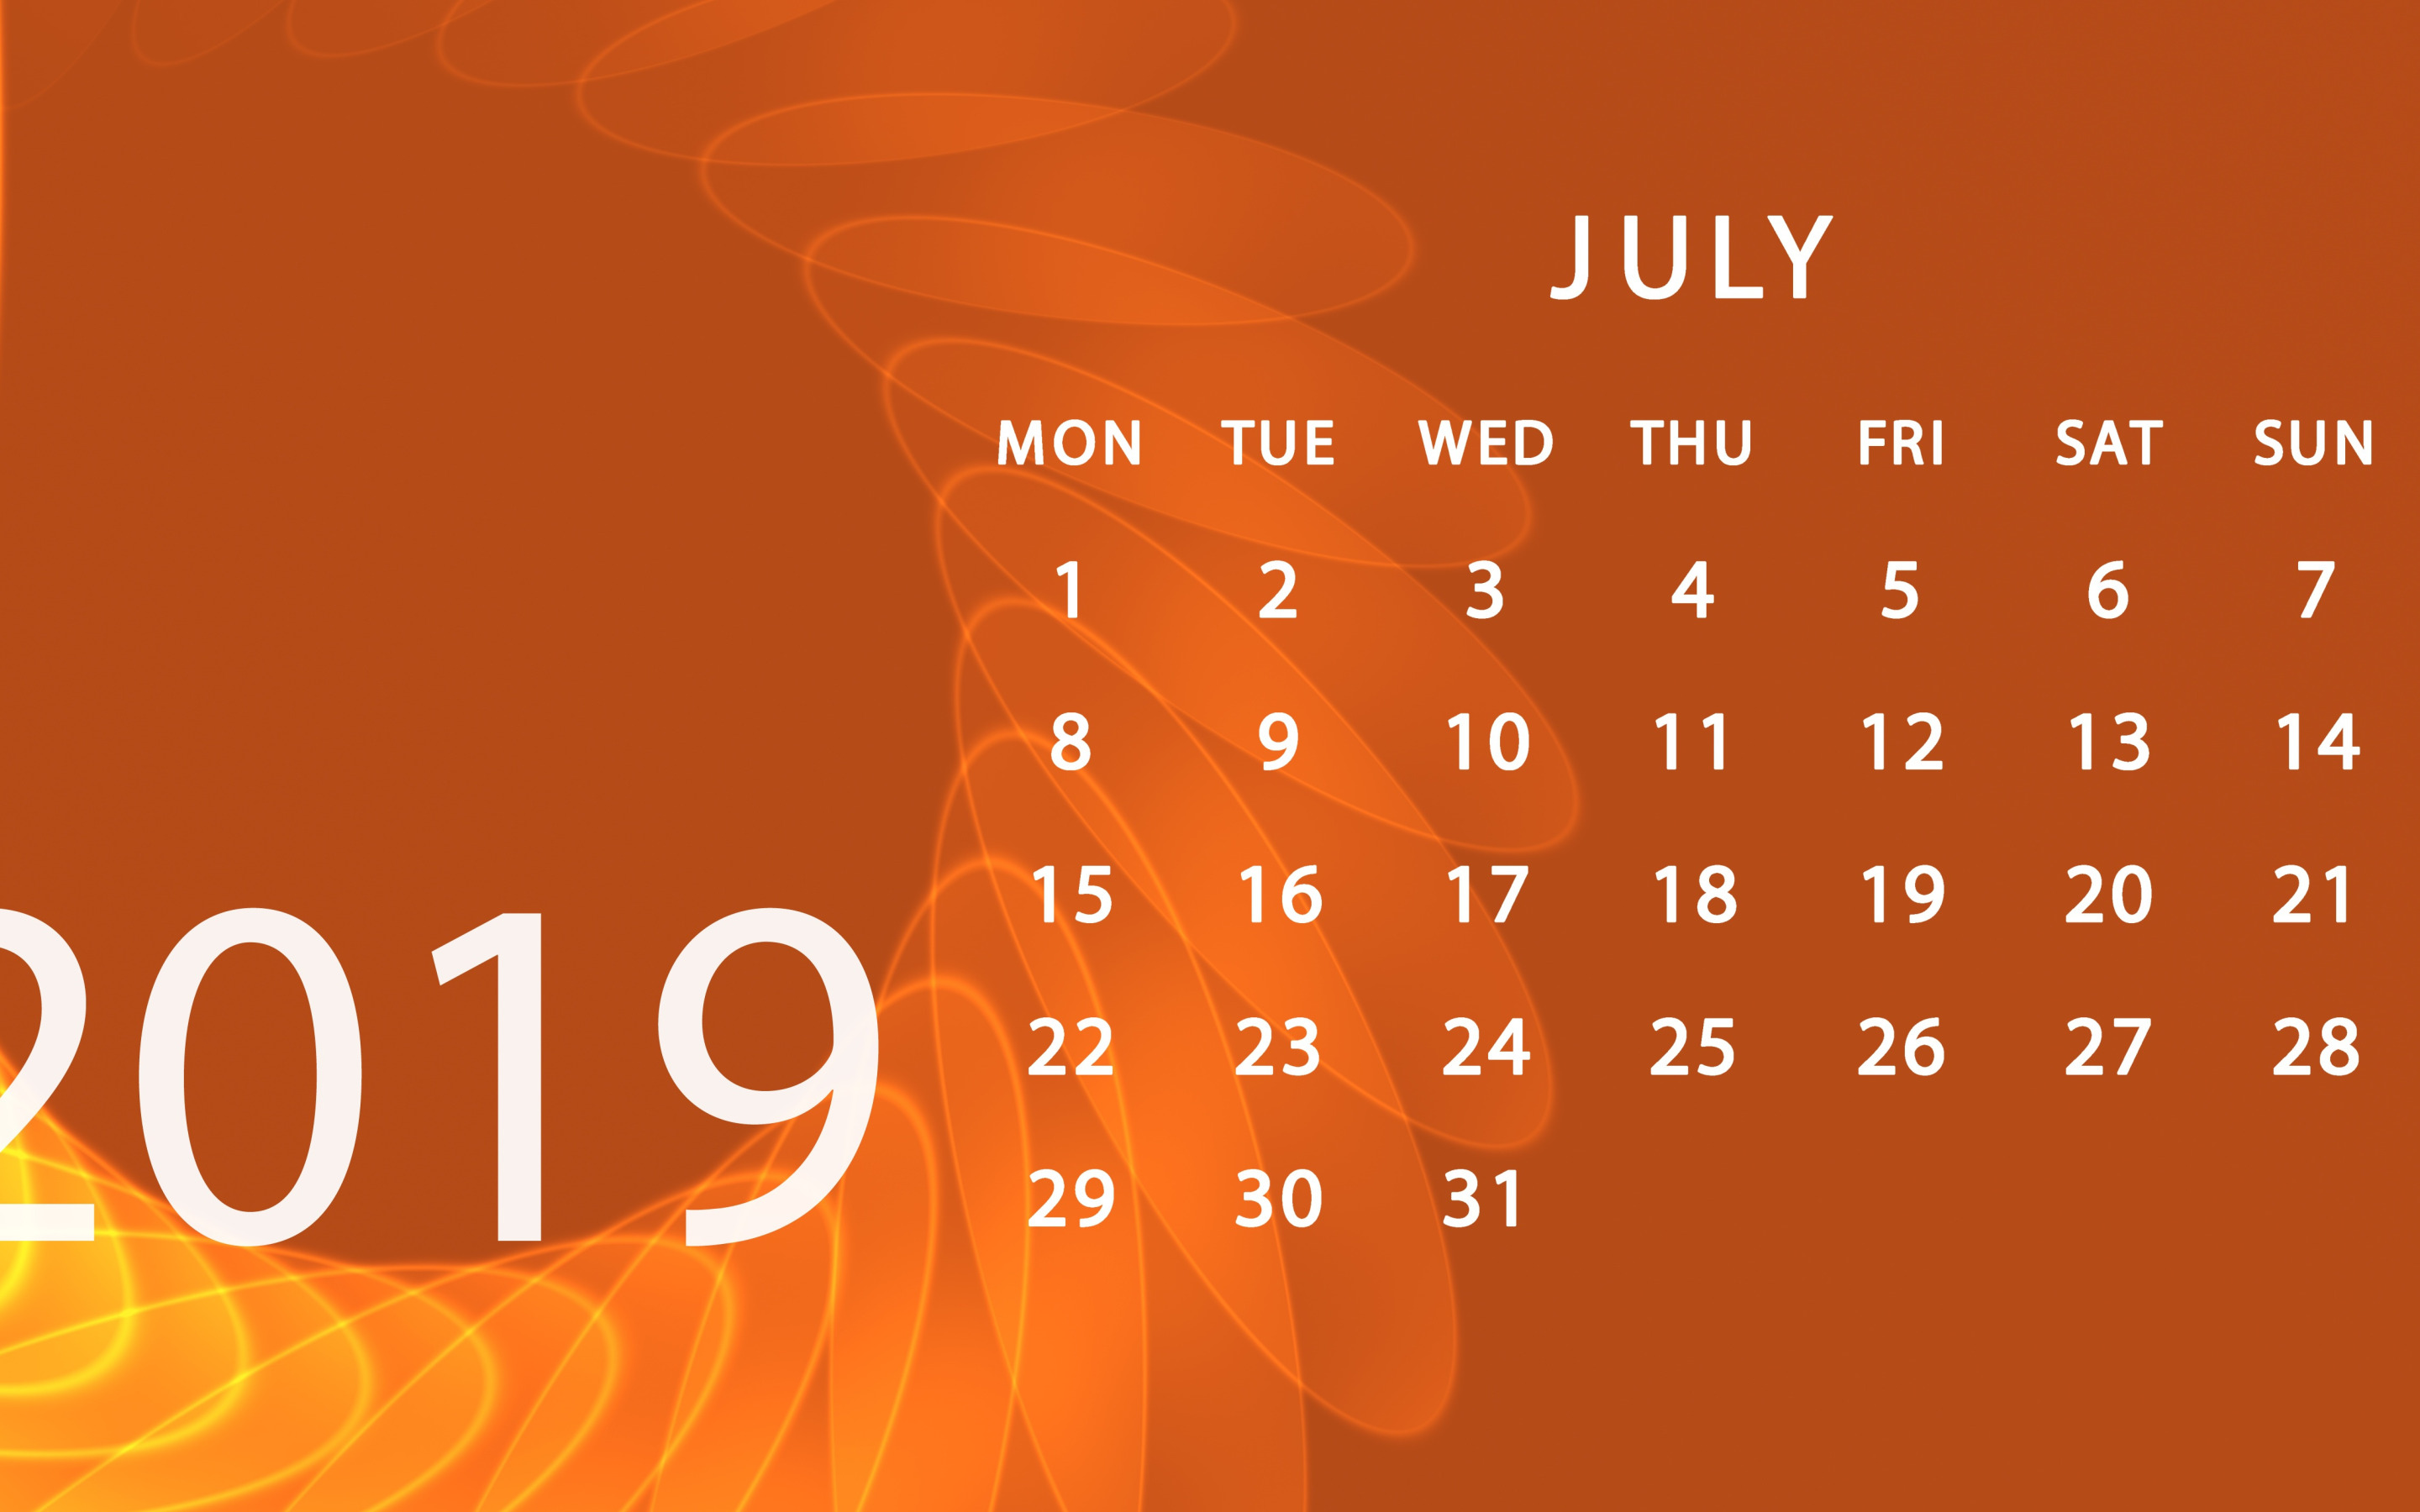 Календарь на июль месяц. Календарь июль. Красивый календарь июль. Фон для календаря июль. Июль 2019 календарь.